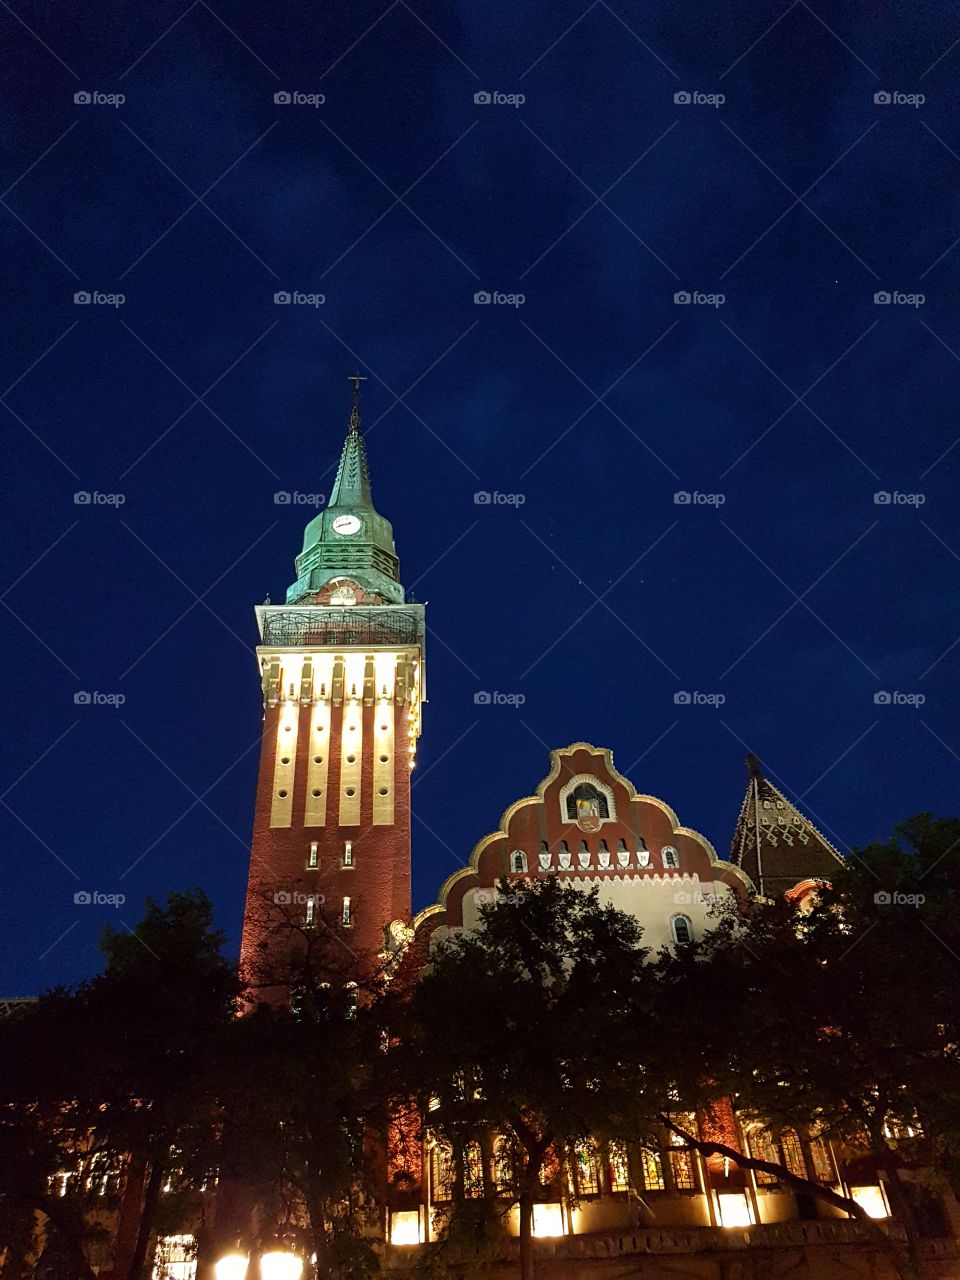 city hall by night,subotica serbia